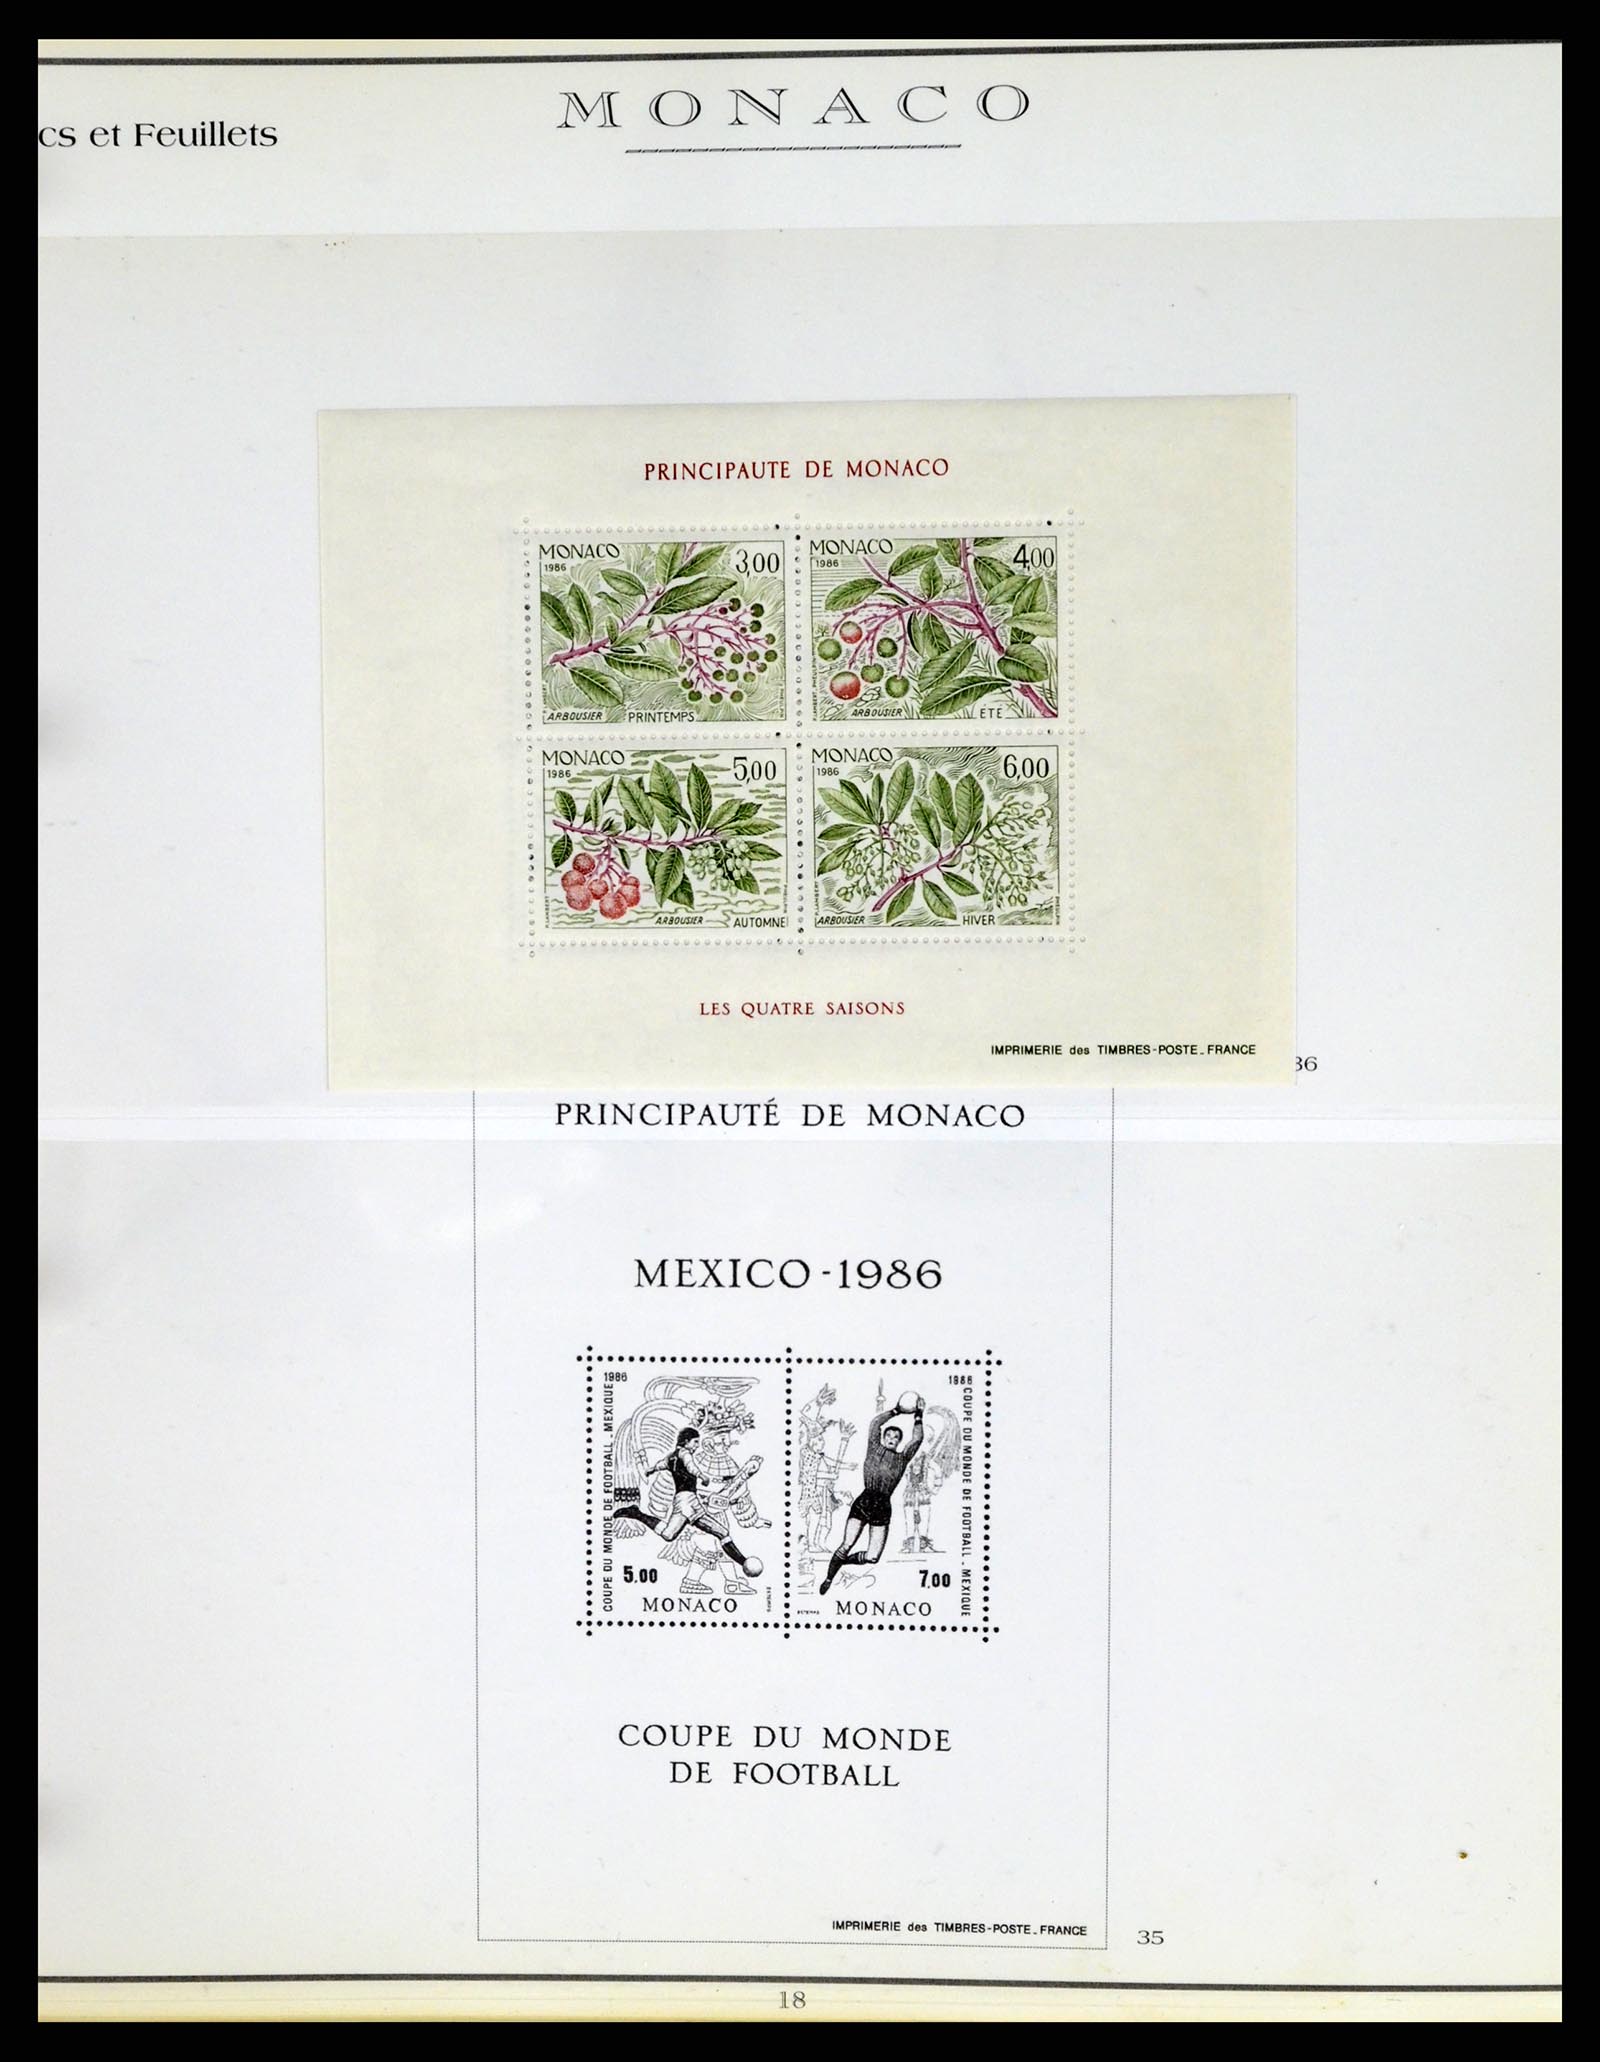 37437 191 - Stamp collection 37437 Monaco 1885-1996.